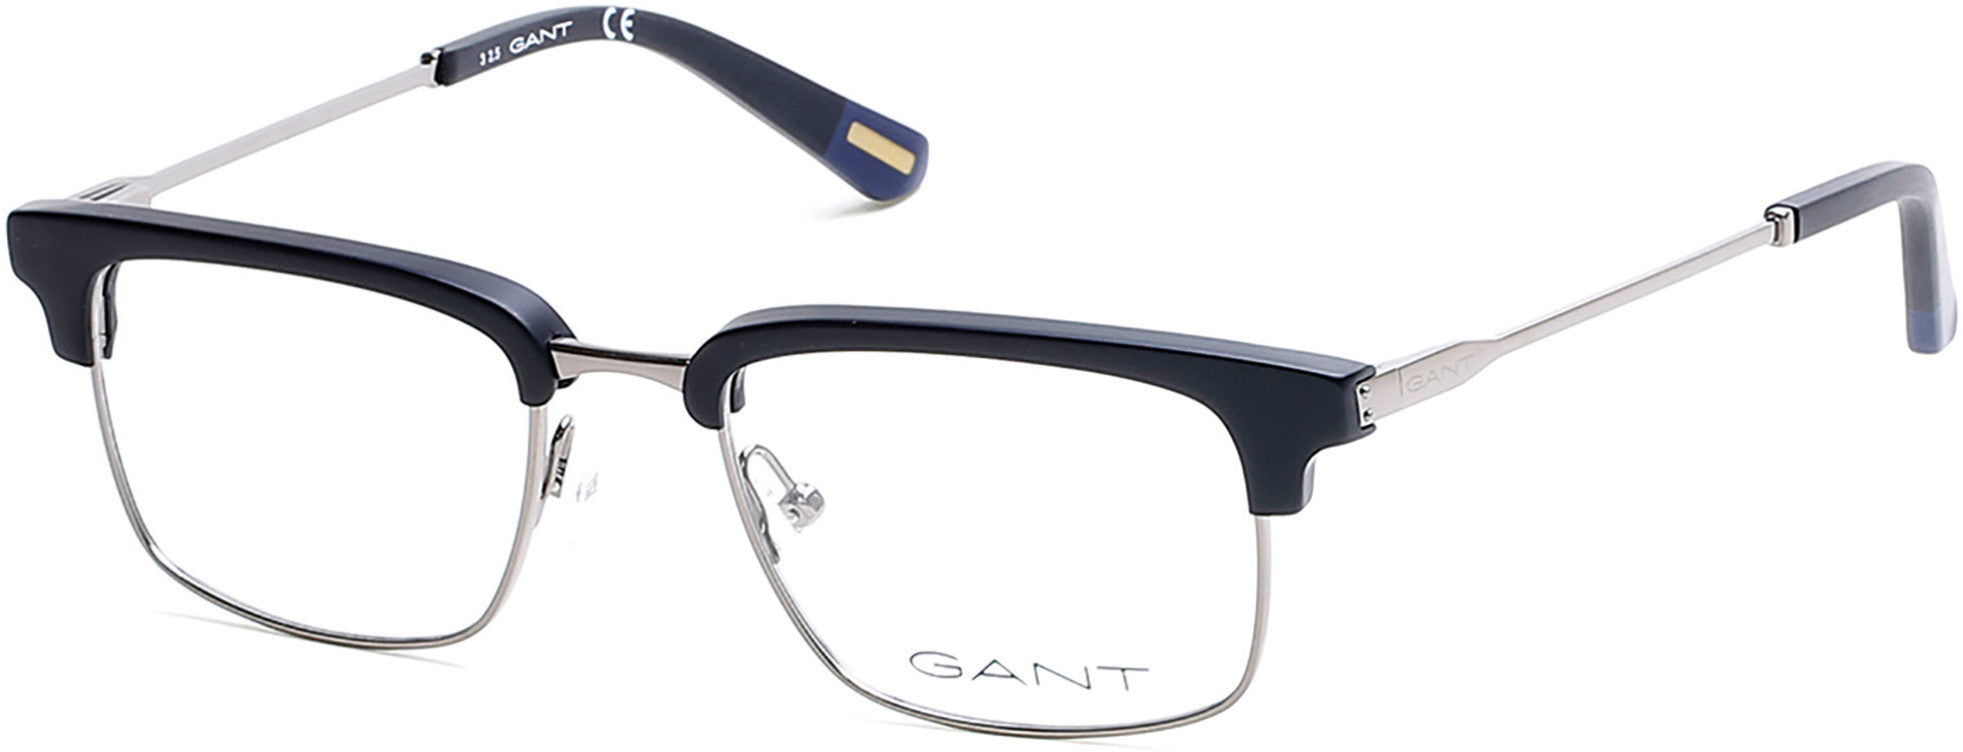 Gant GA3127 Browline Eyeglasses 002-002 - Matte Black